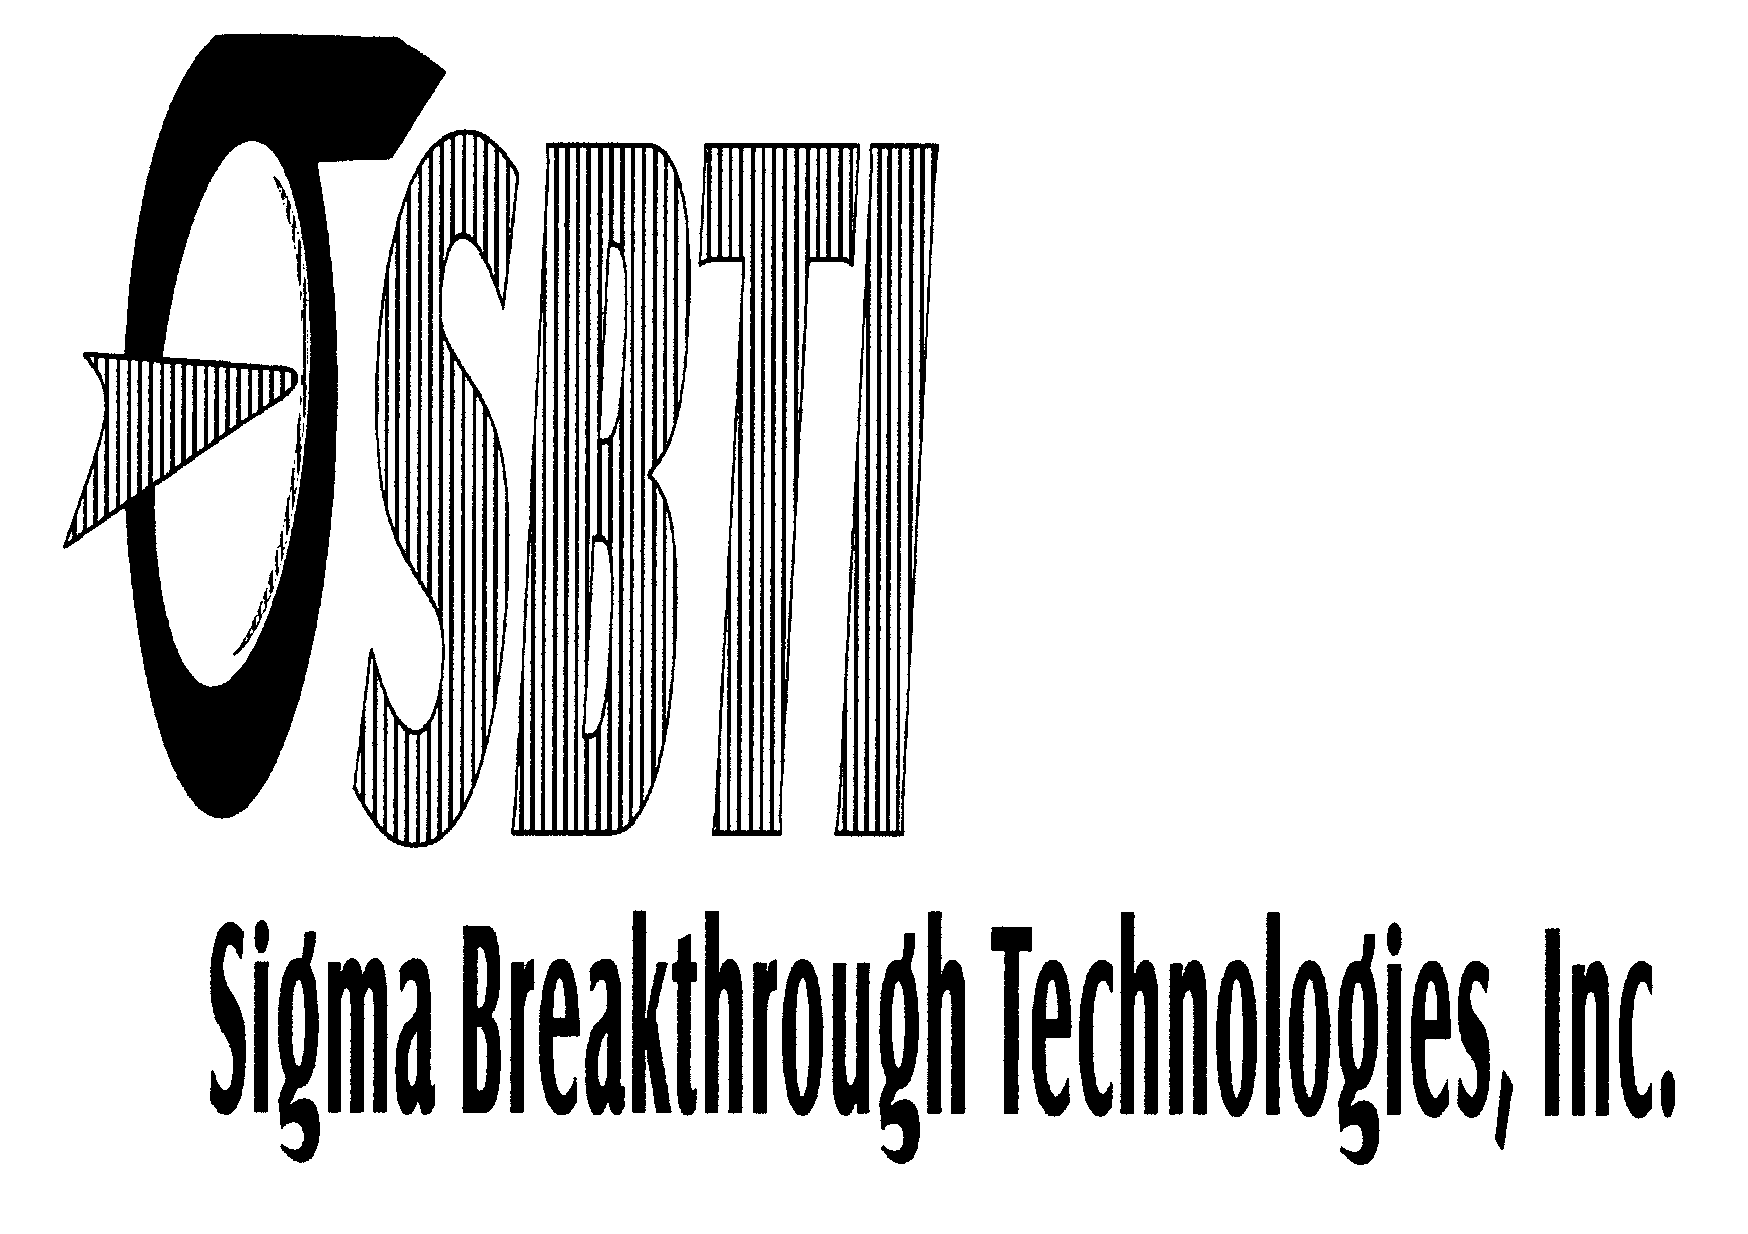 SBTI SIGMA BREAKTHROUGH TECHNOLOGIES, INC.